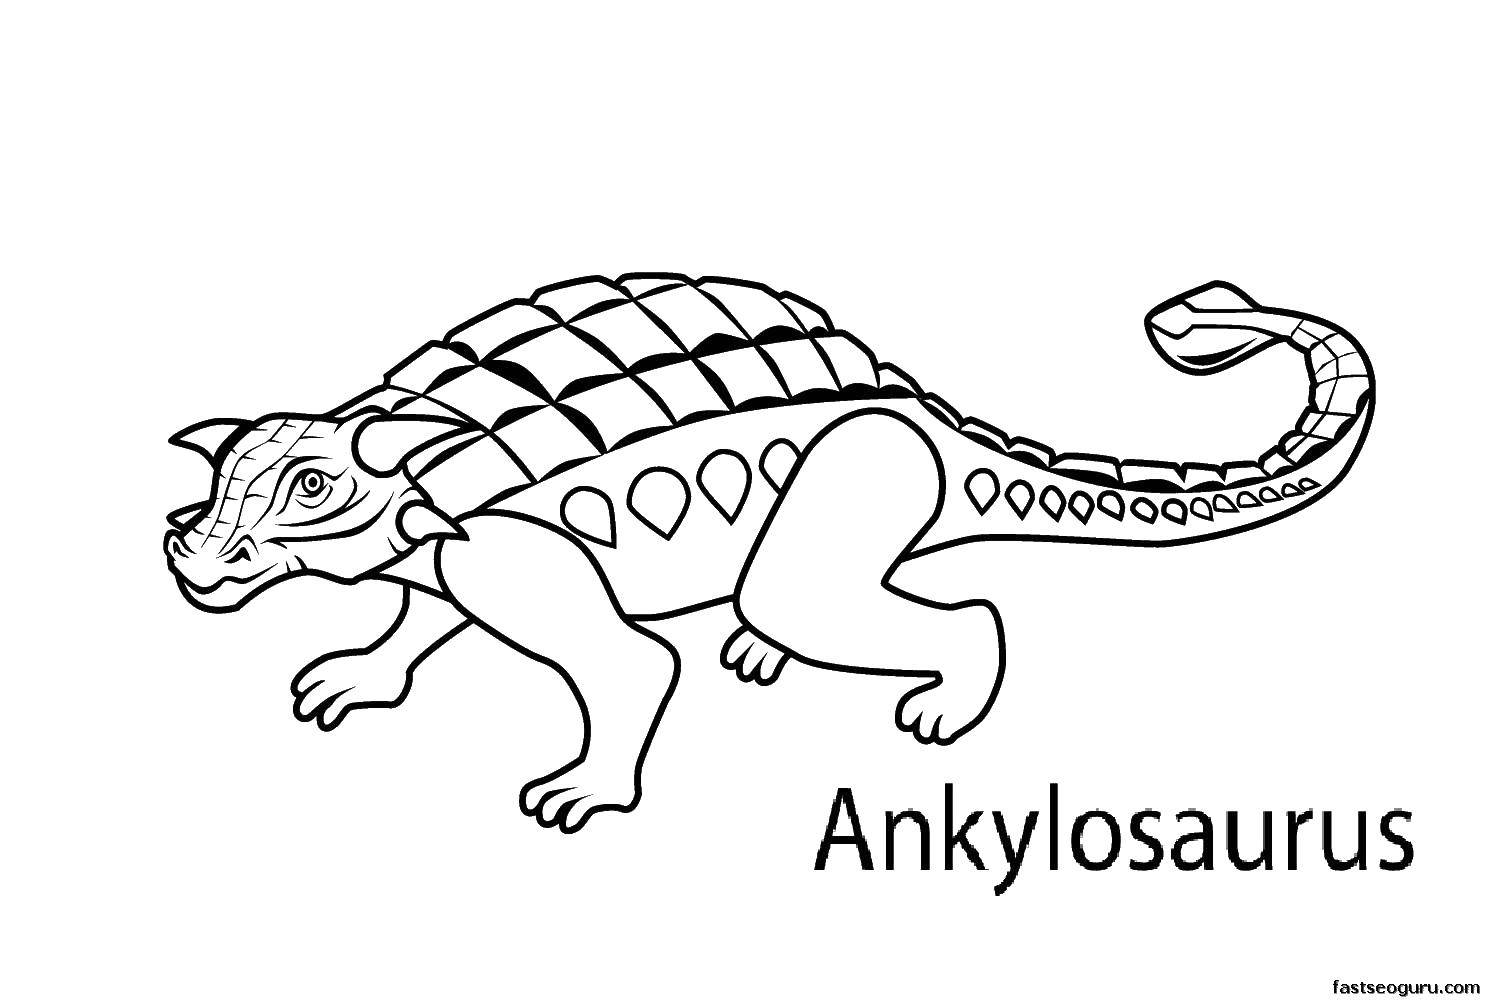 Coloring Ankylosaurus on 4 legs. Category Jurassic Park. Tags:  Dinosaurs.